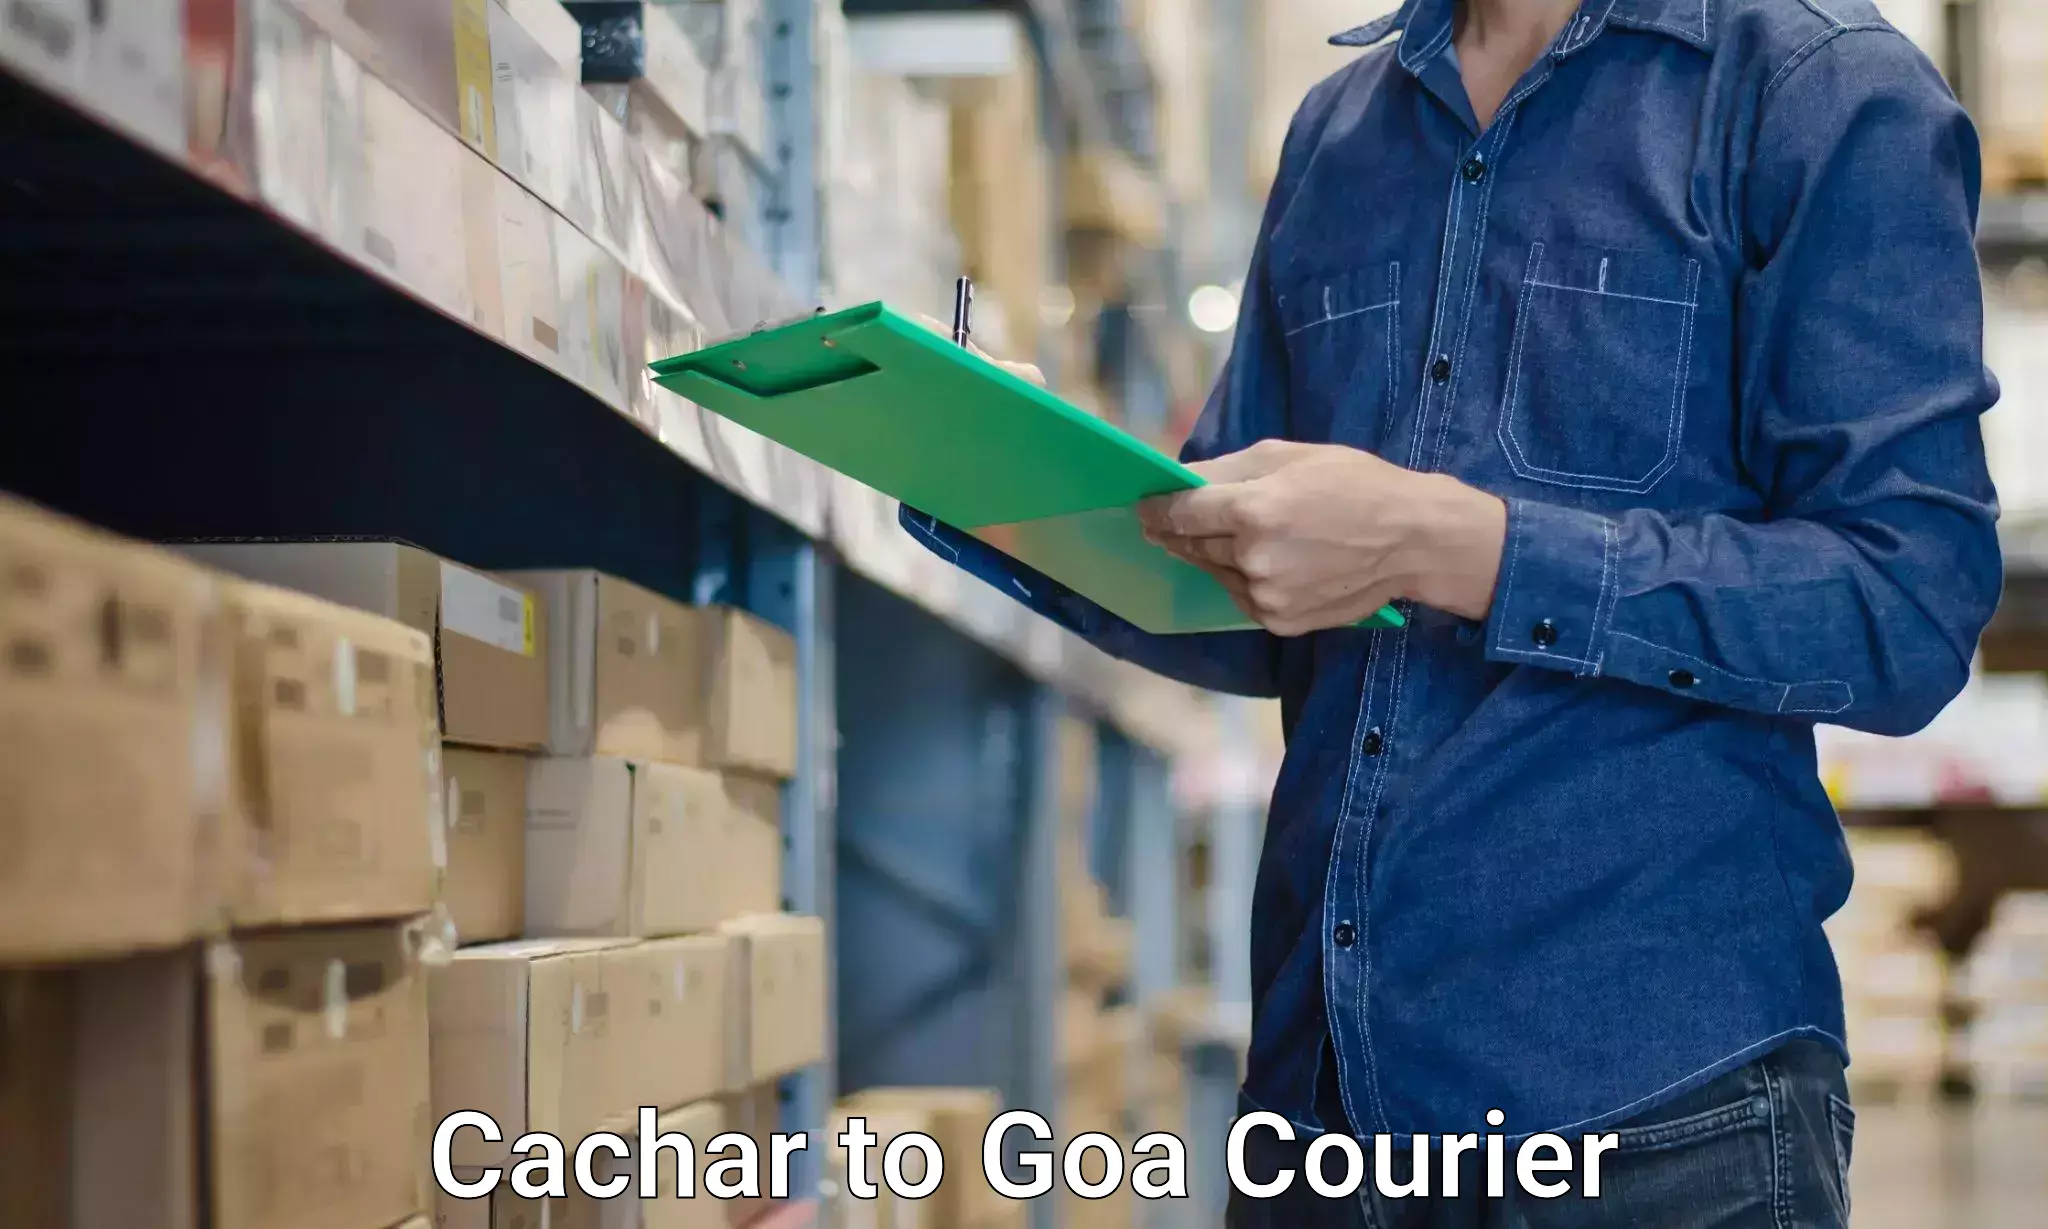 Quality moving company Cachar to Goa